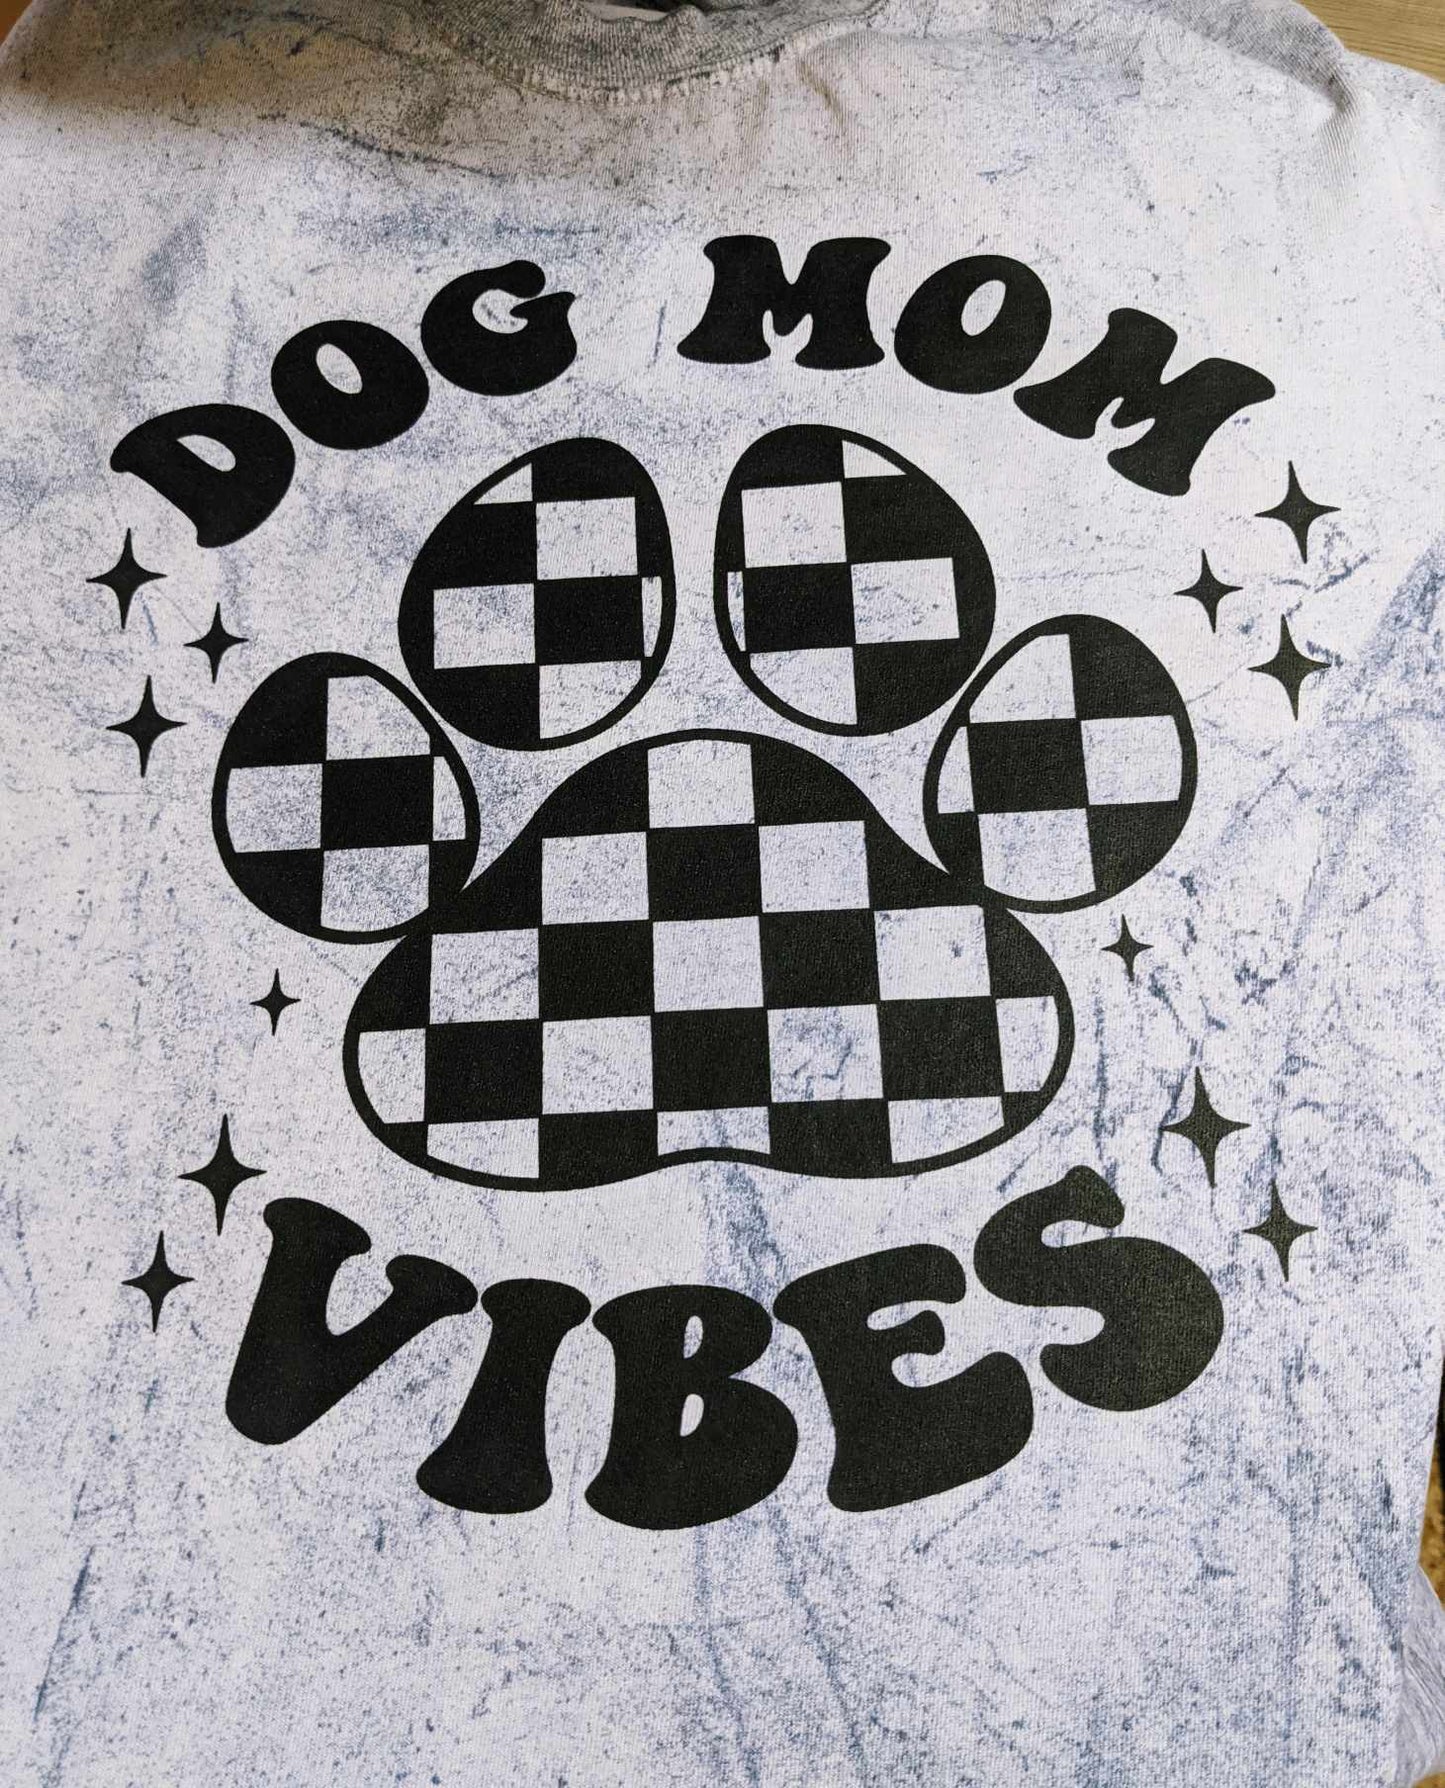 Dog Mom Vibes